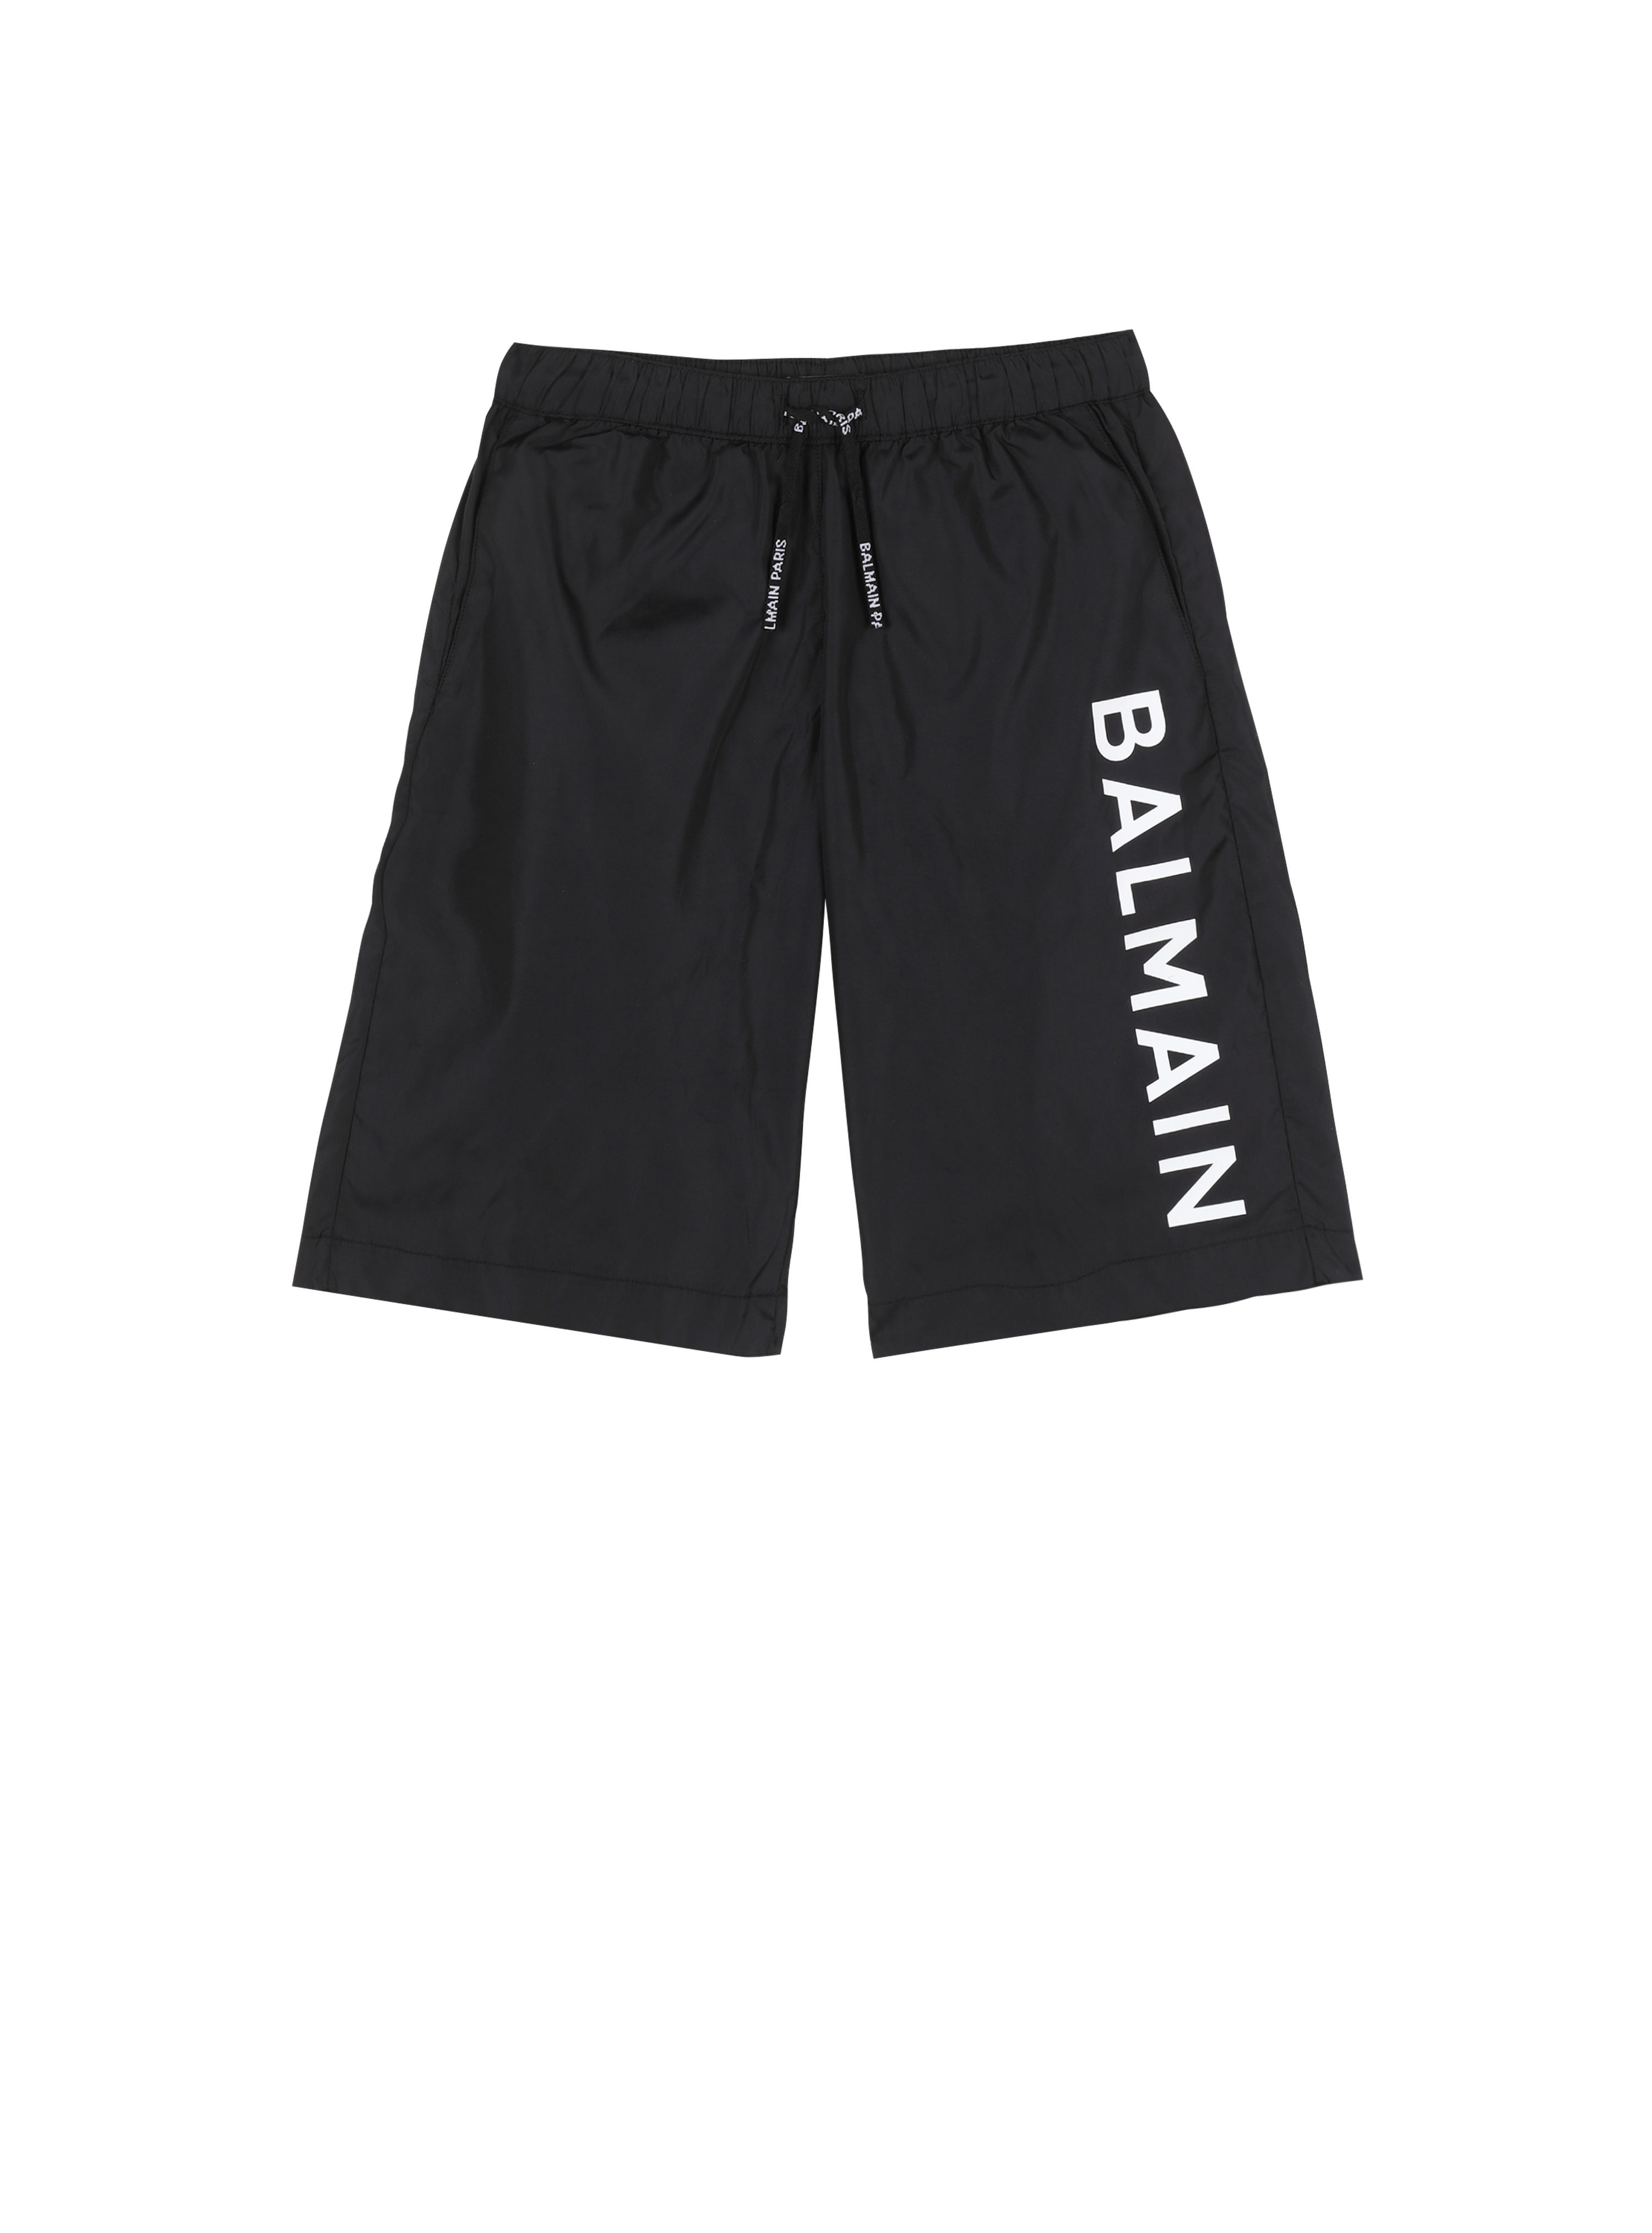 Balmain巴尔曼标志泳装短裤, black